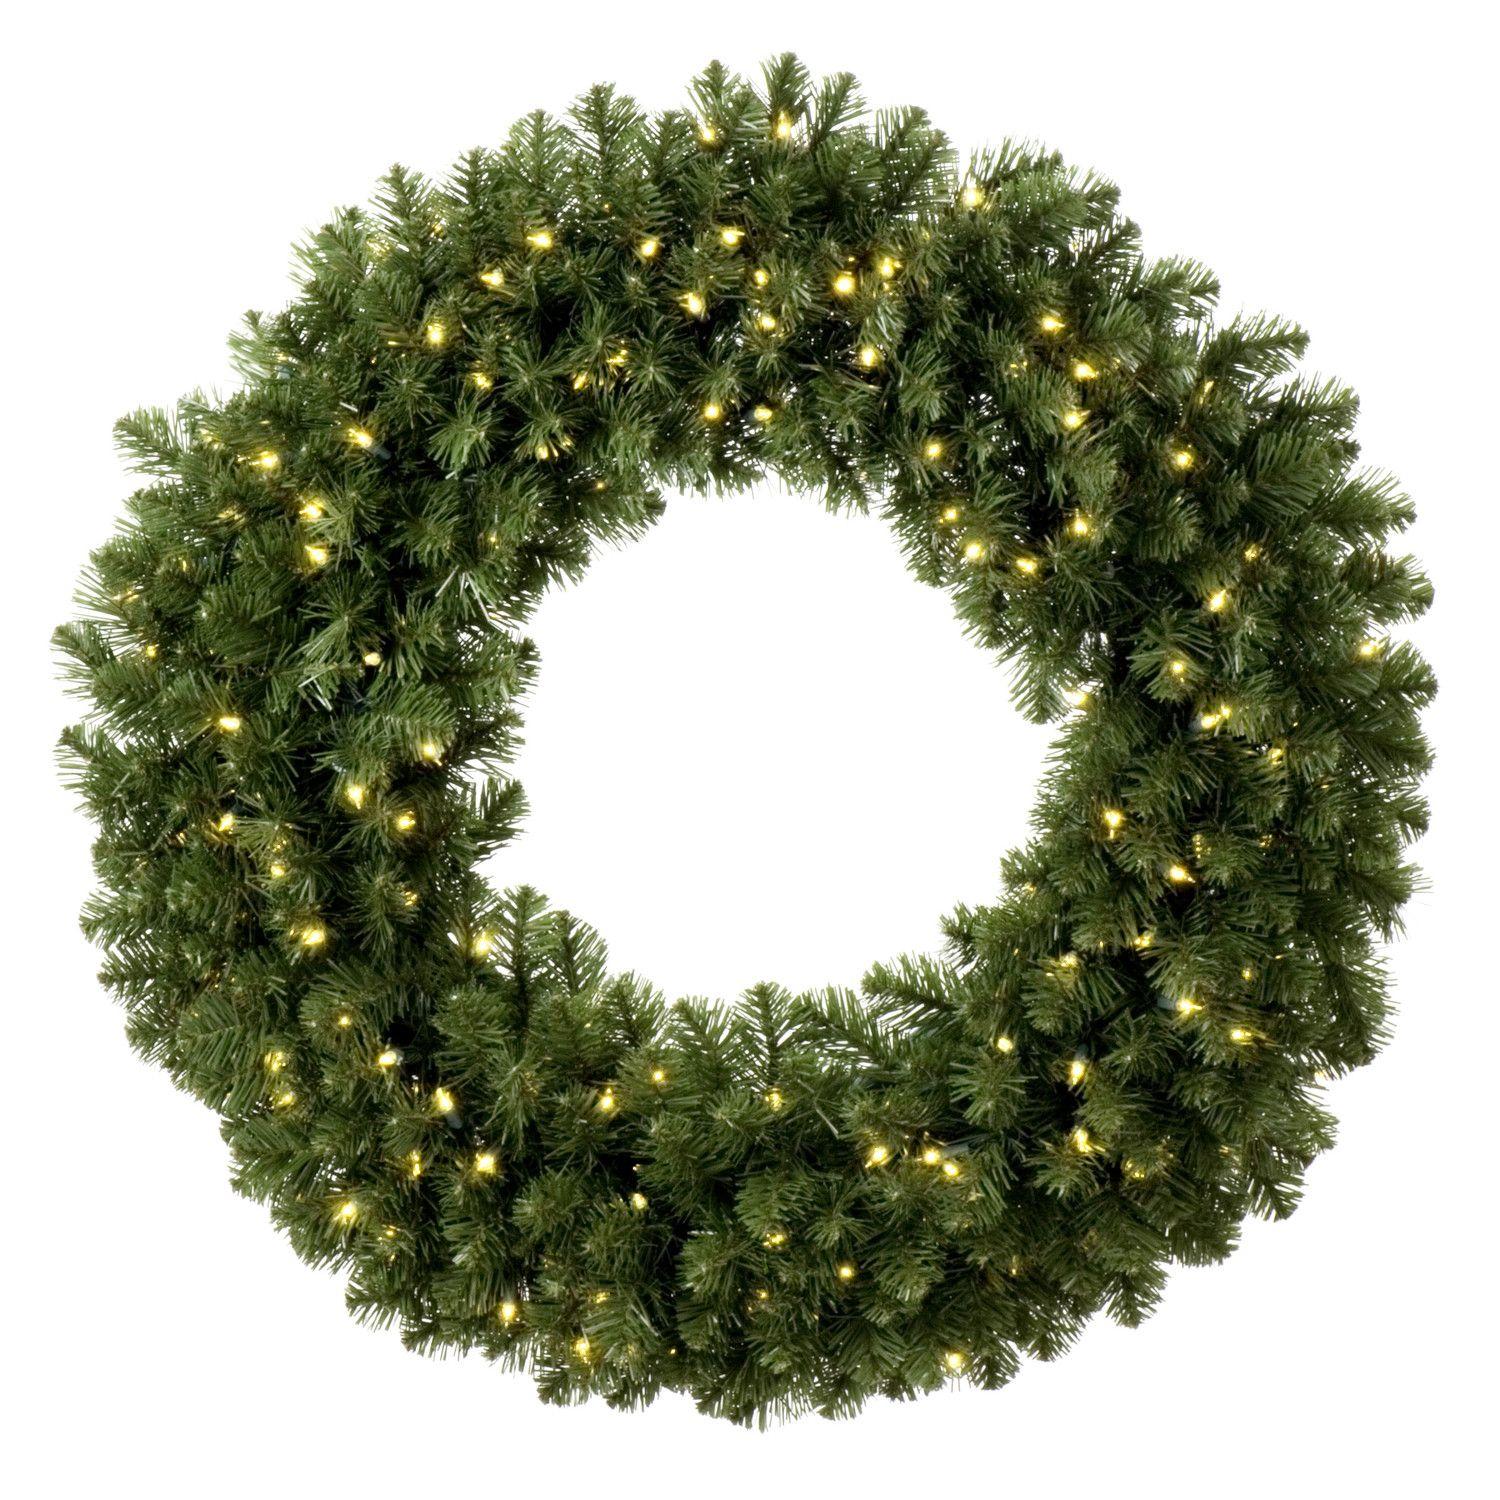 HD Christmas Wreaths Wallpaper